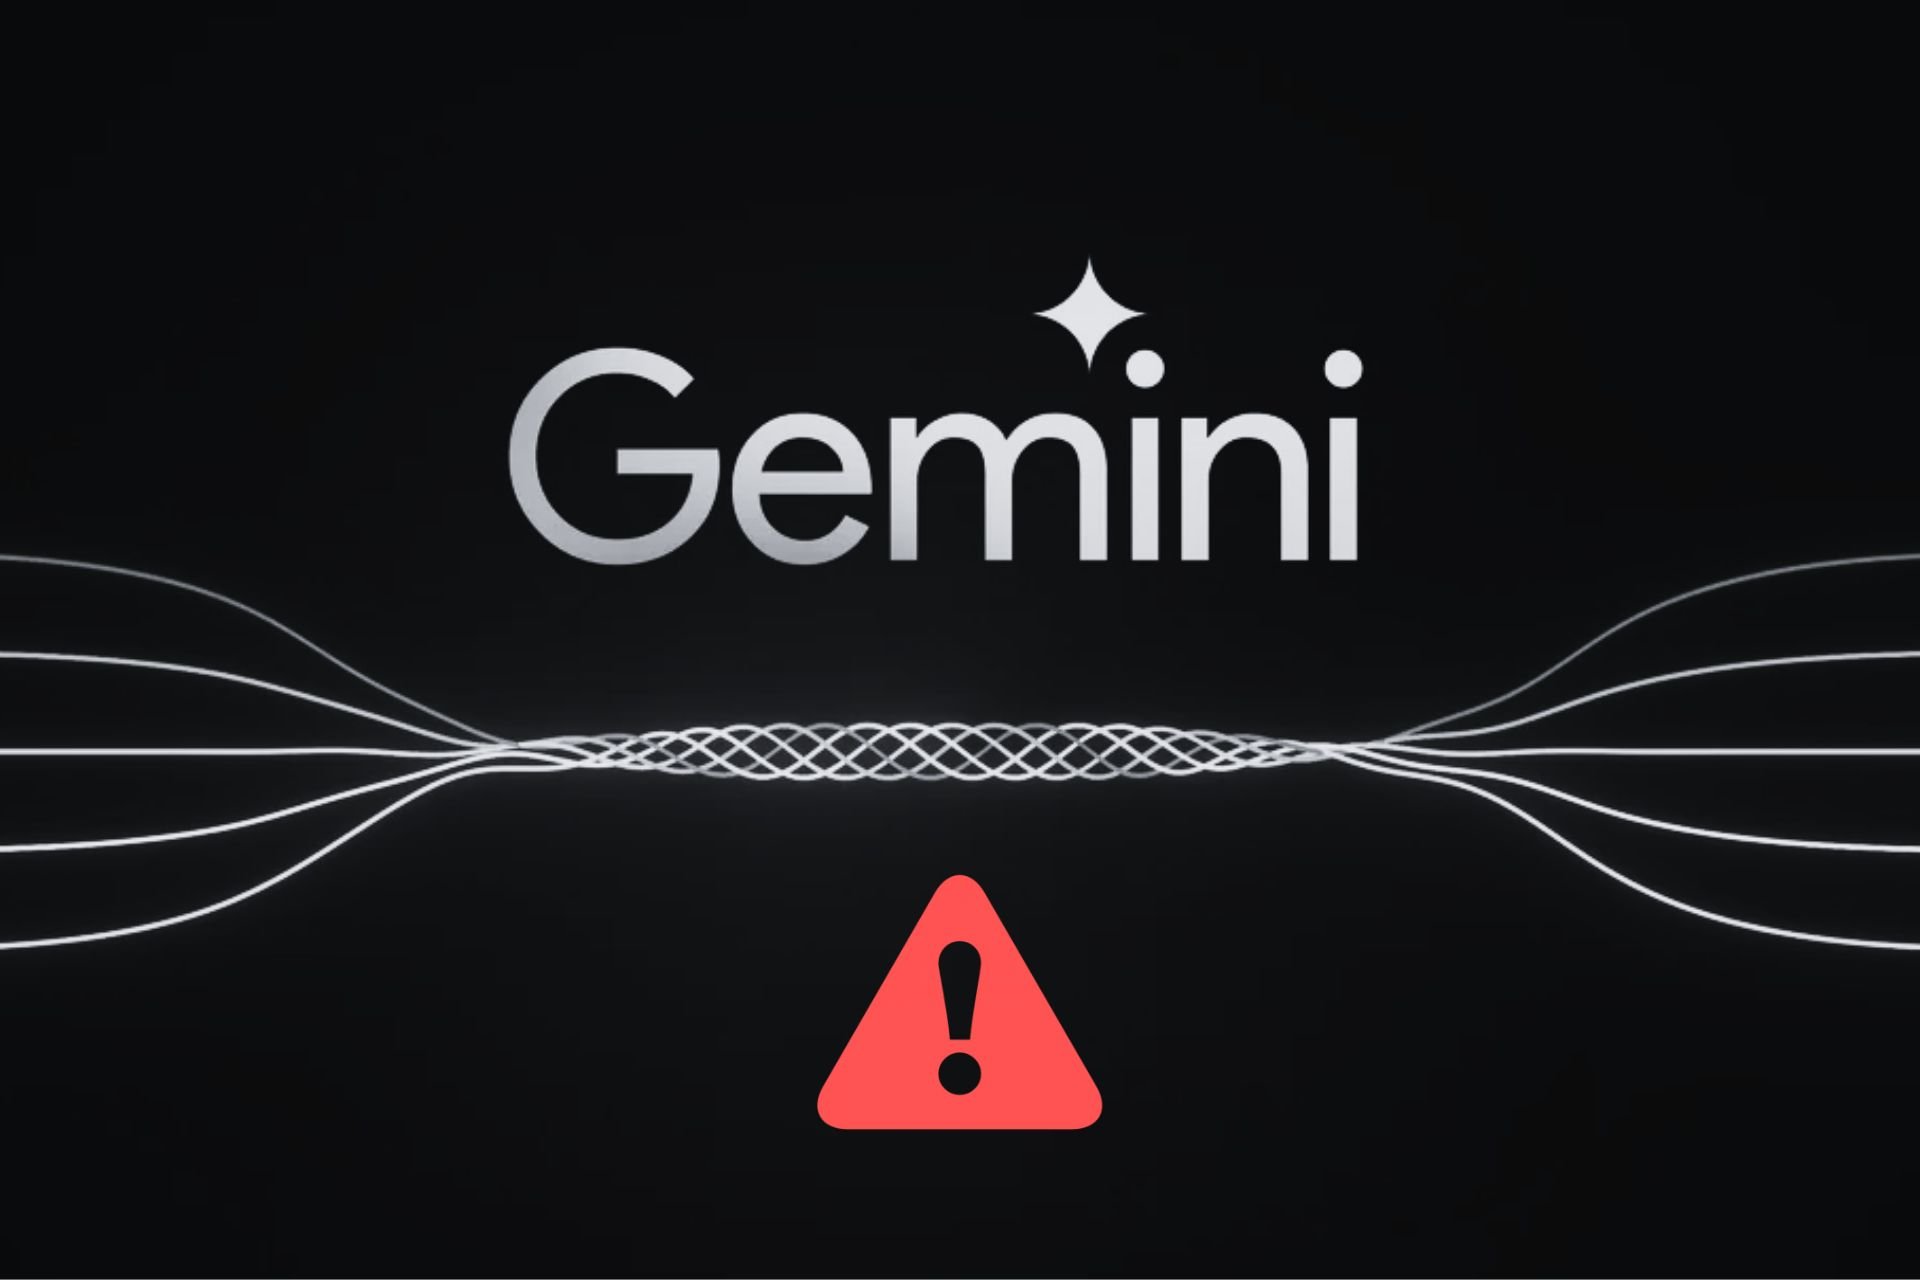 Google’s Gemini experiences image and text generation errors